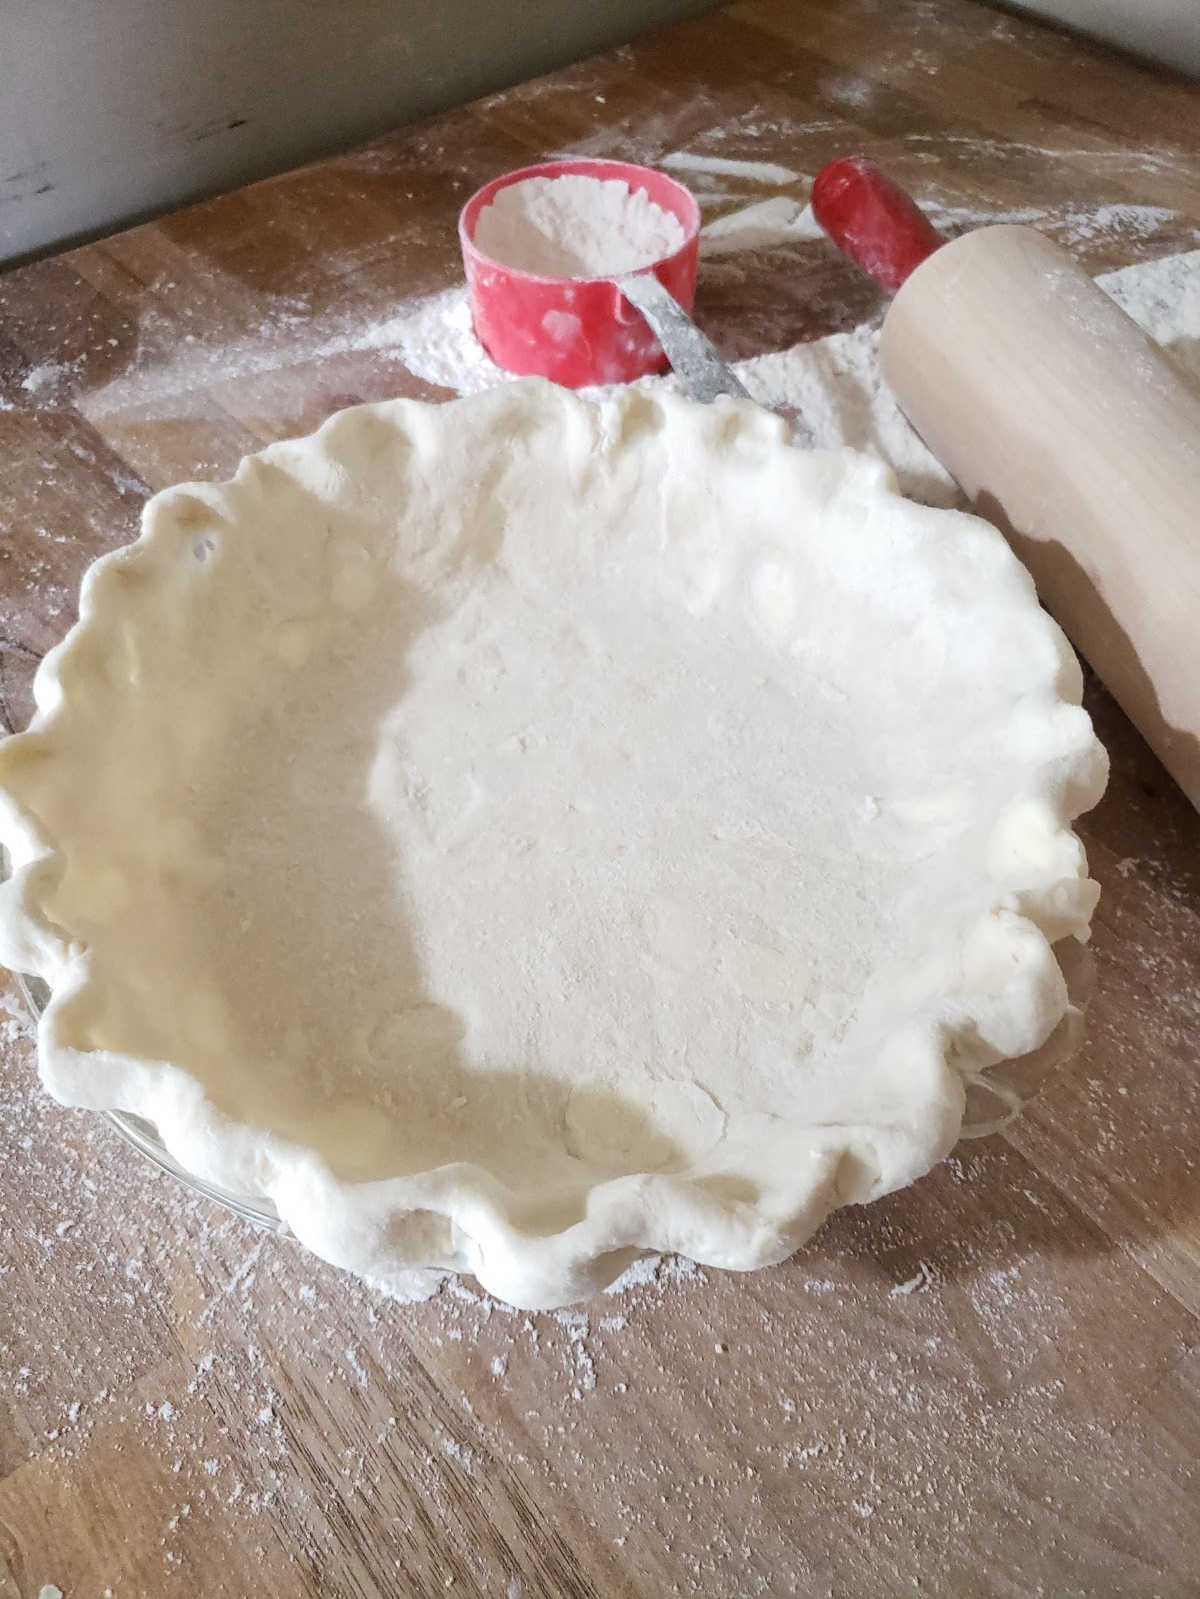 unbaked pie crust in glass pie dish on butcher block.